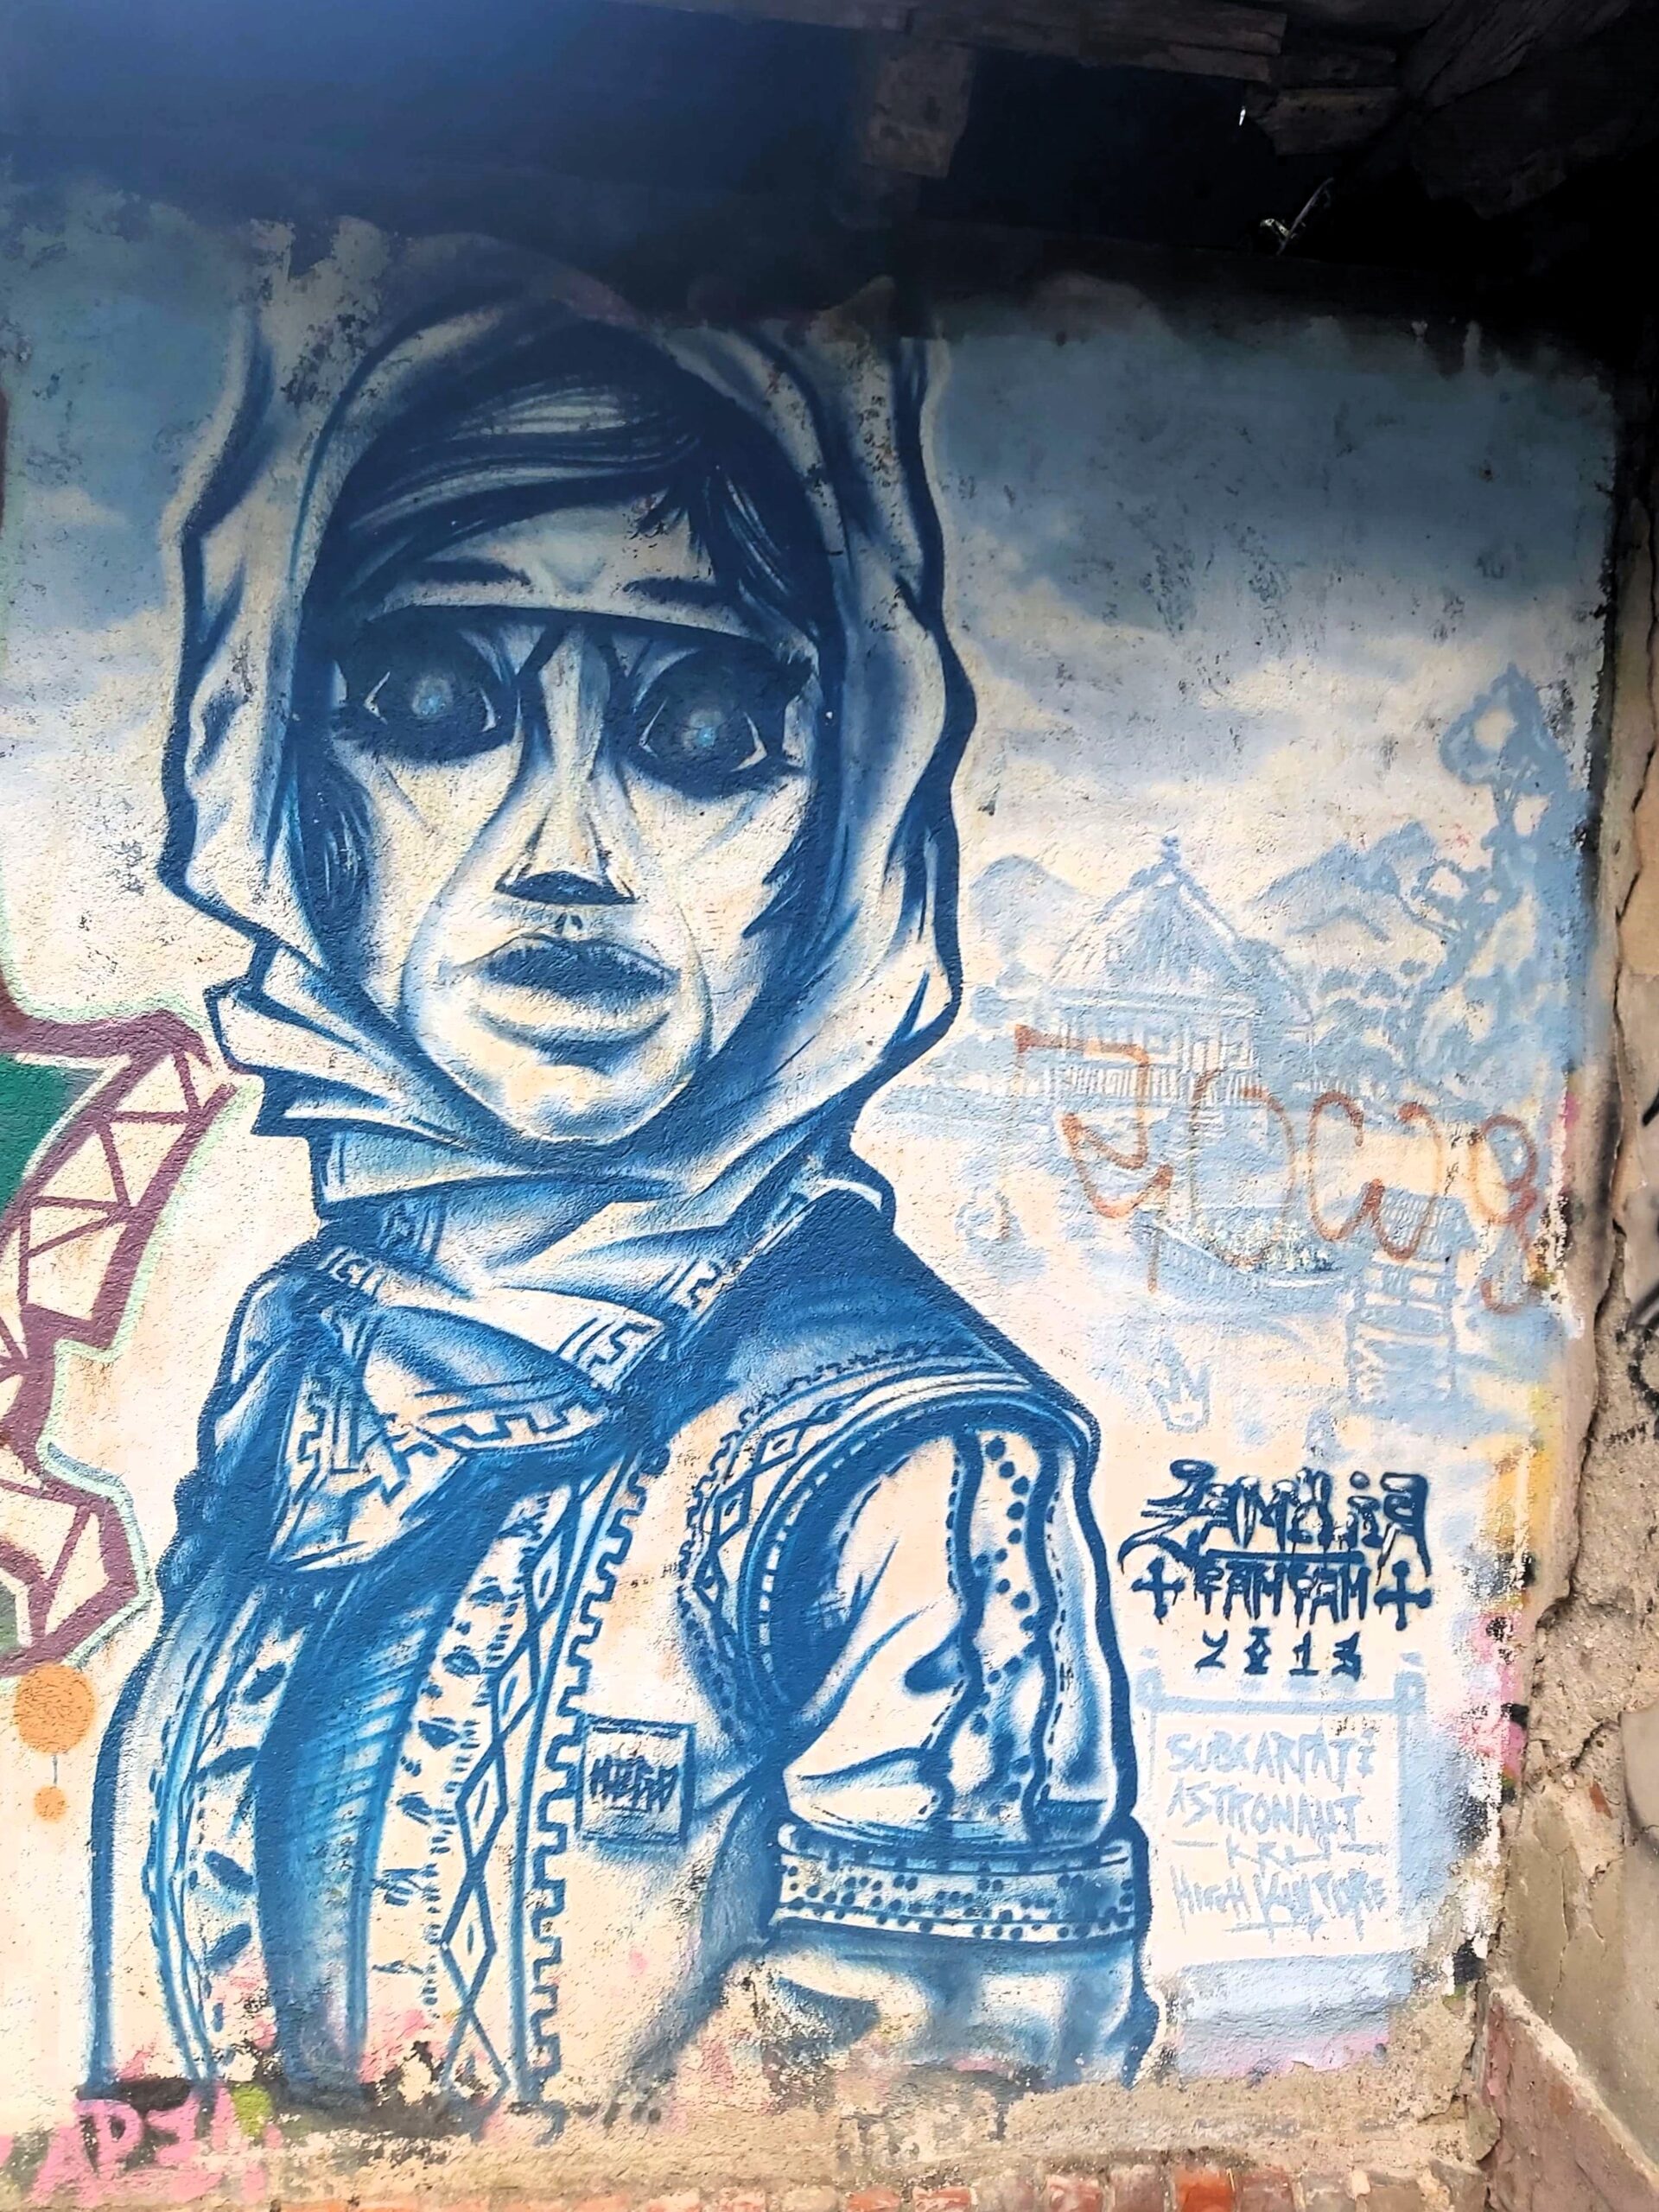 Graffiti in Timisoara, Romania. Haunted looking person